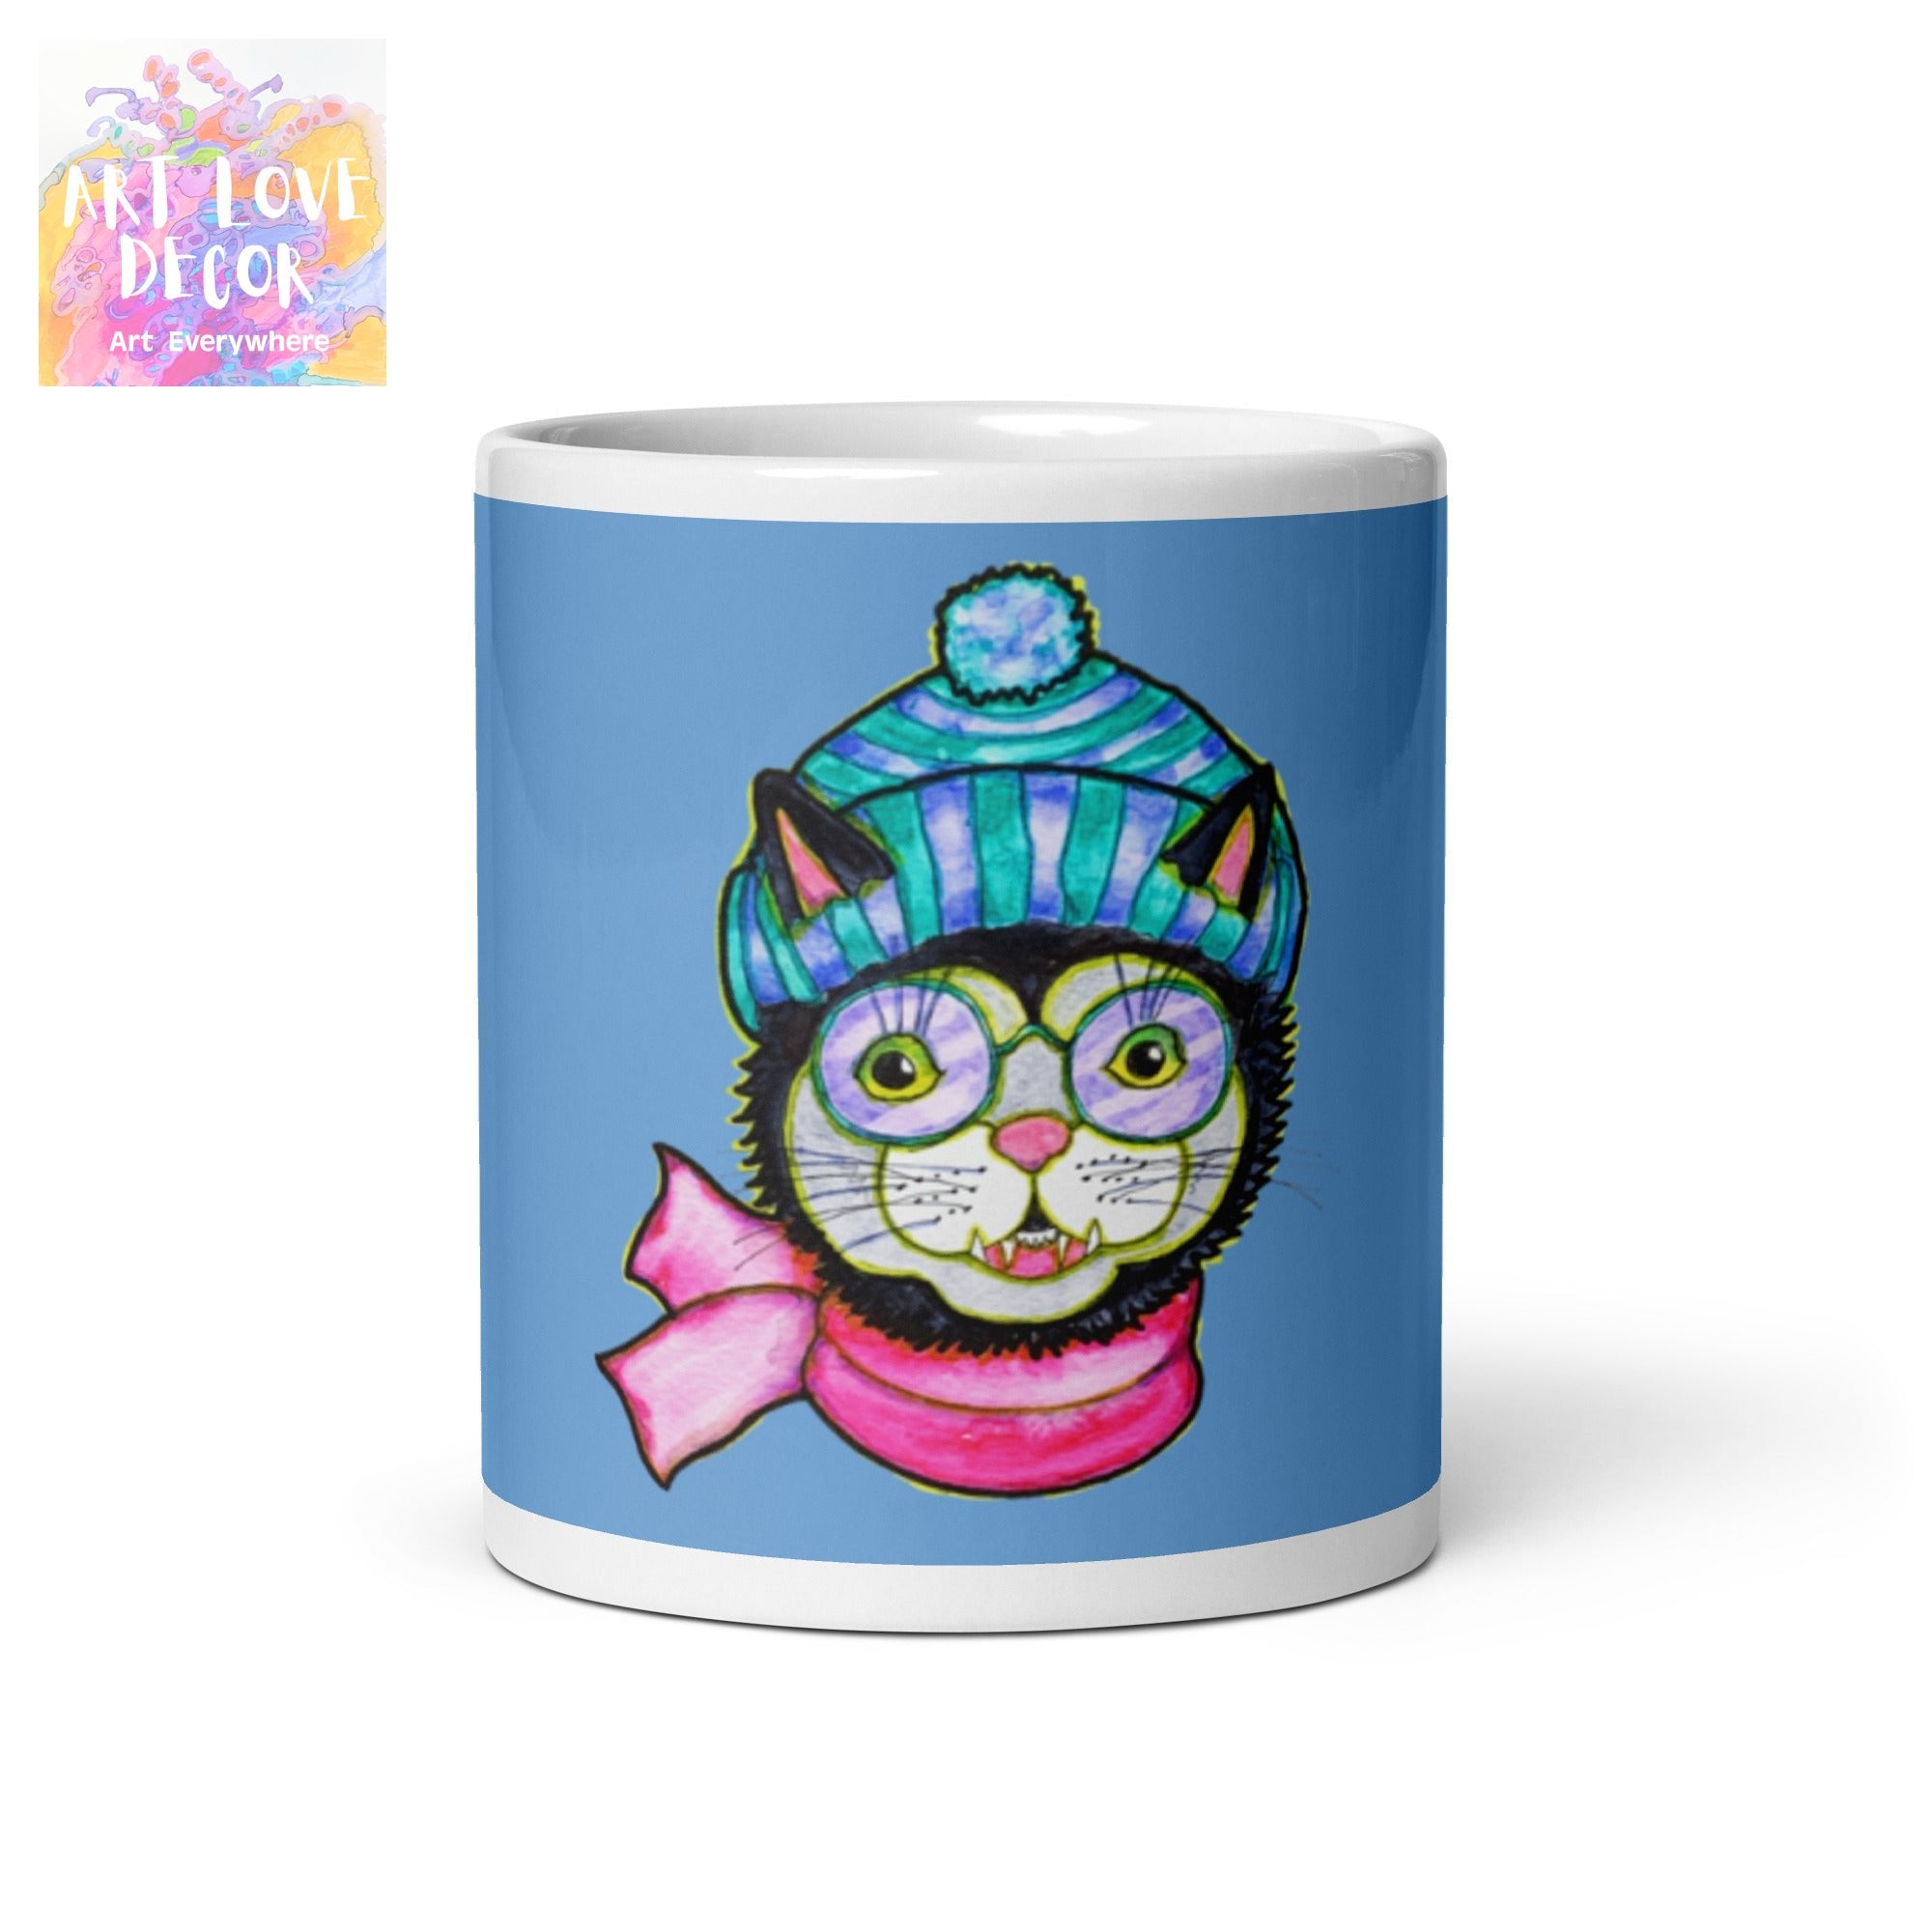 Kitty Cat Beanie White glossy mug - Art Love Decor